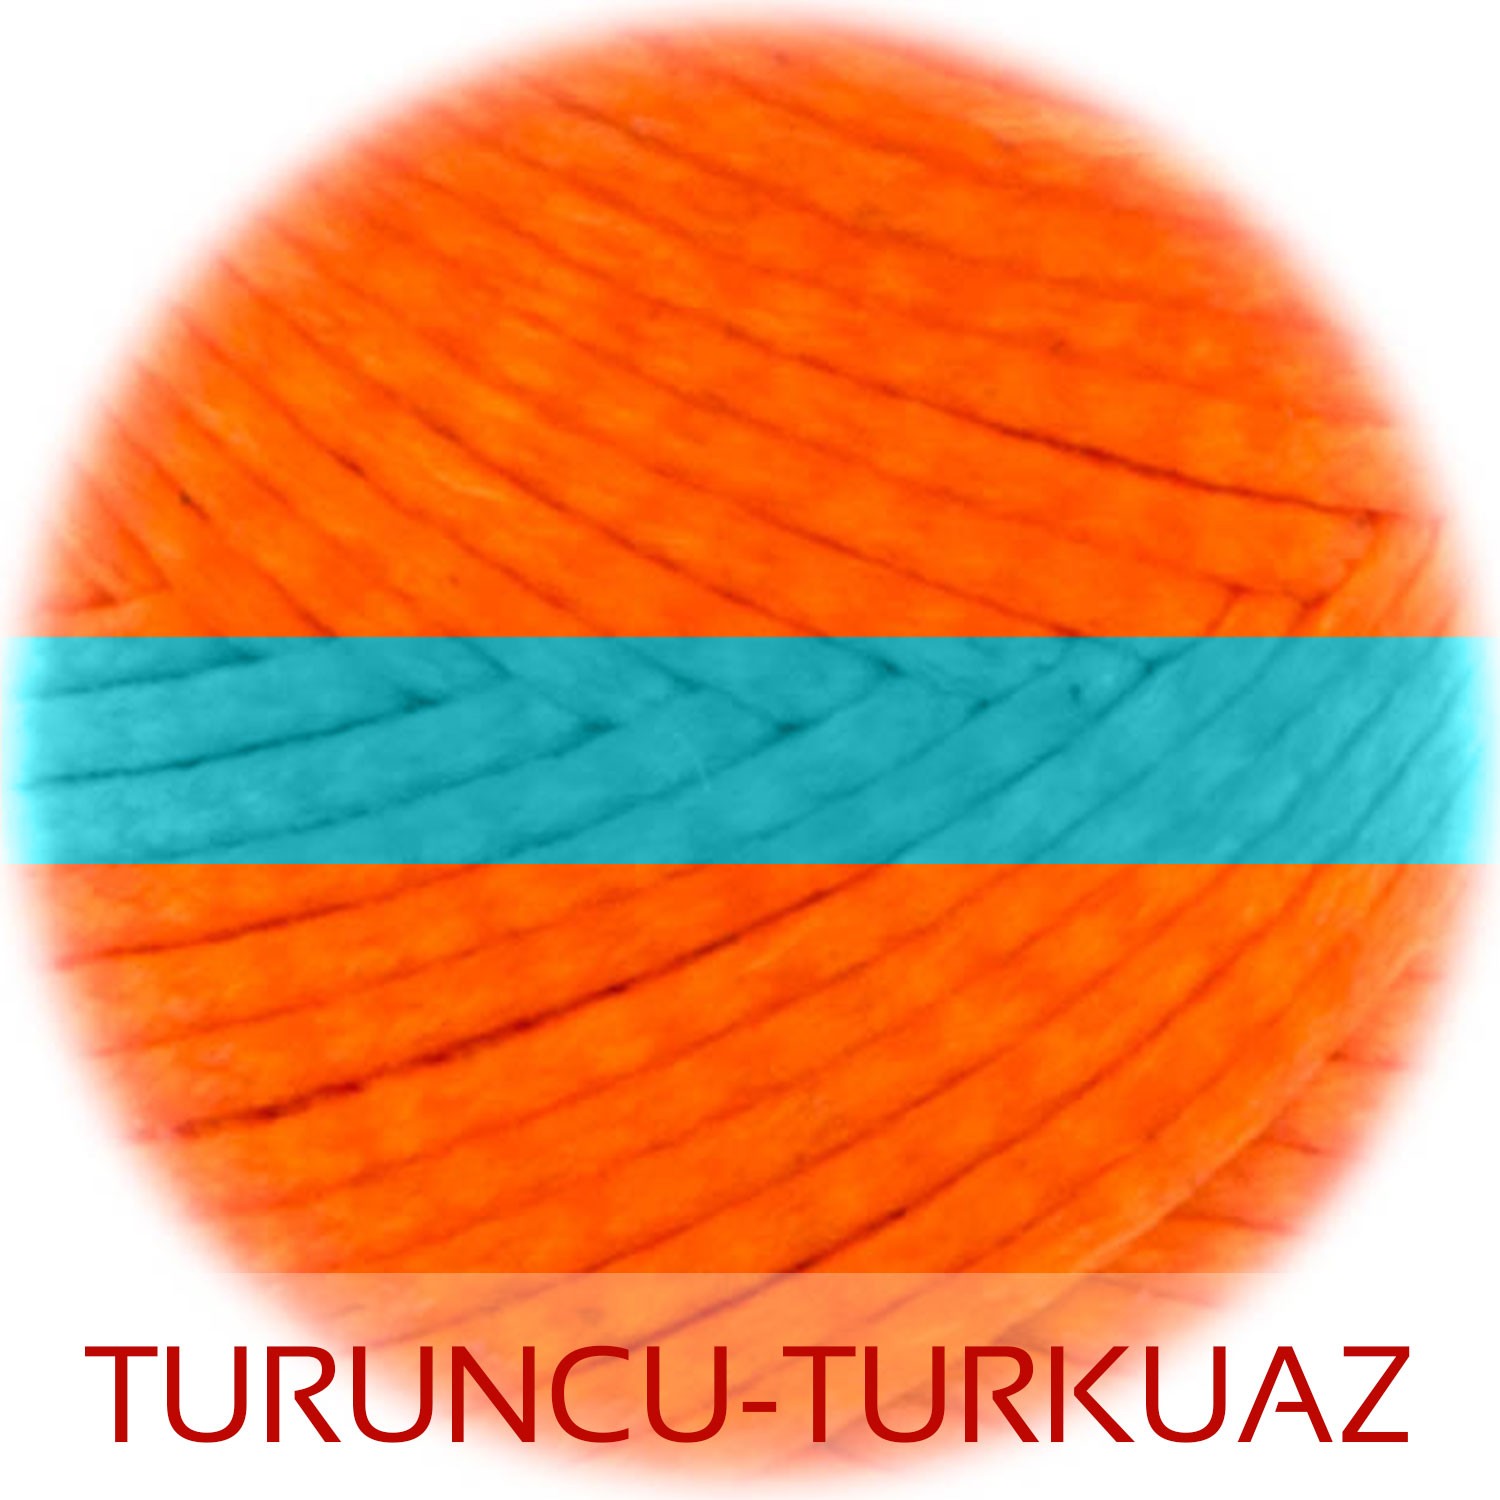 Turuncu-Turkuaz